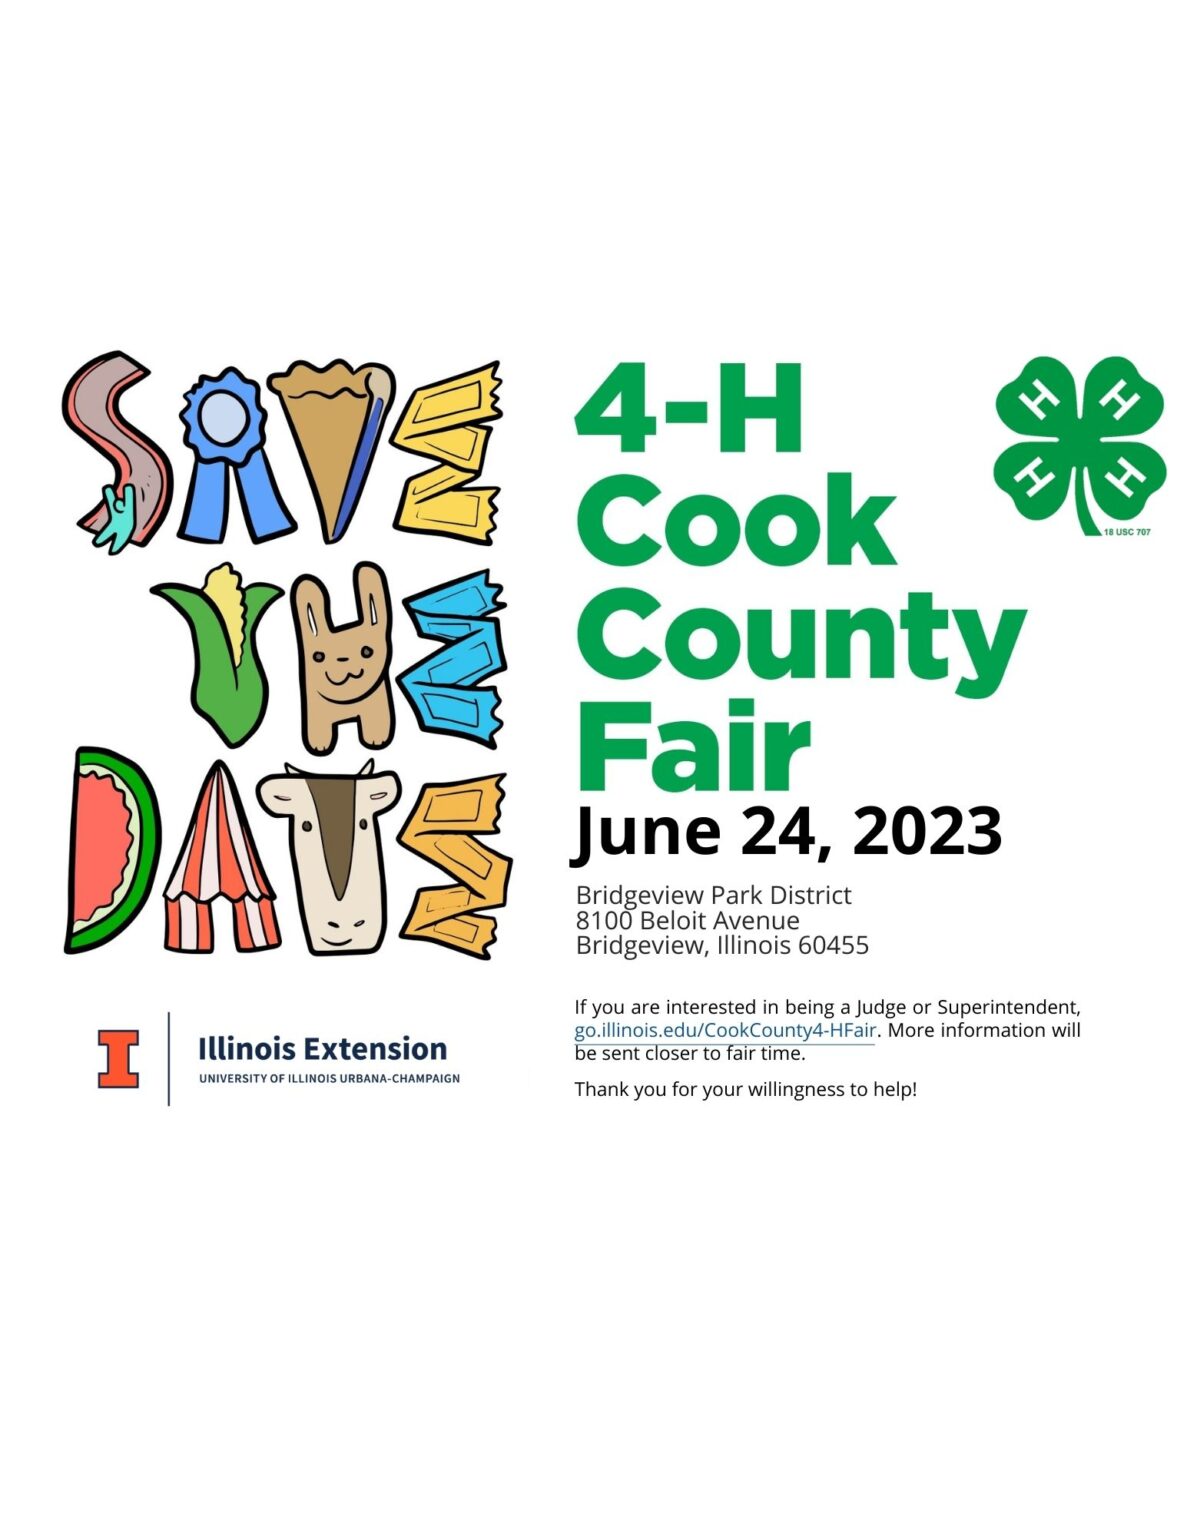 4H Cook County Fair 2023 Village of Bridgeview Illinois